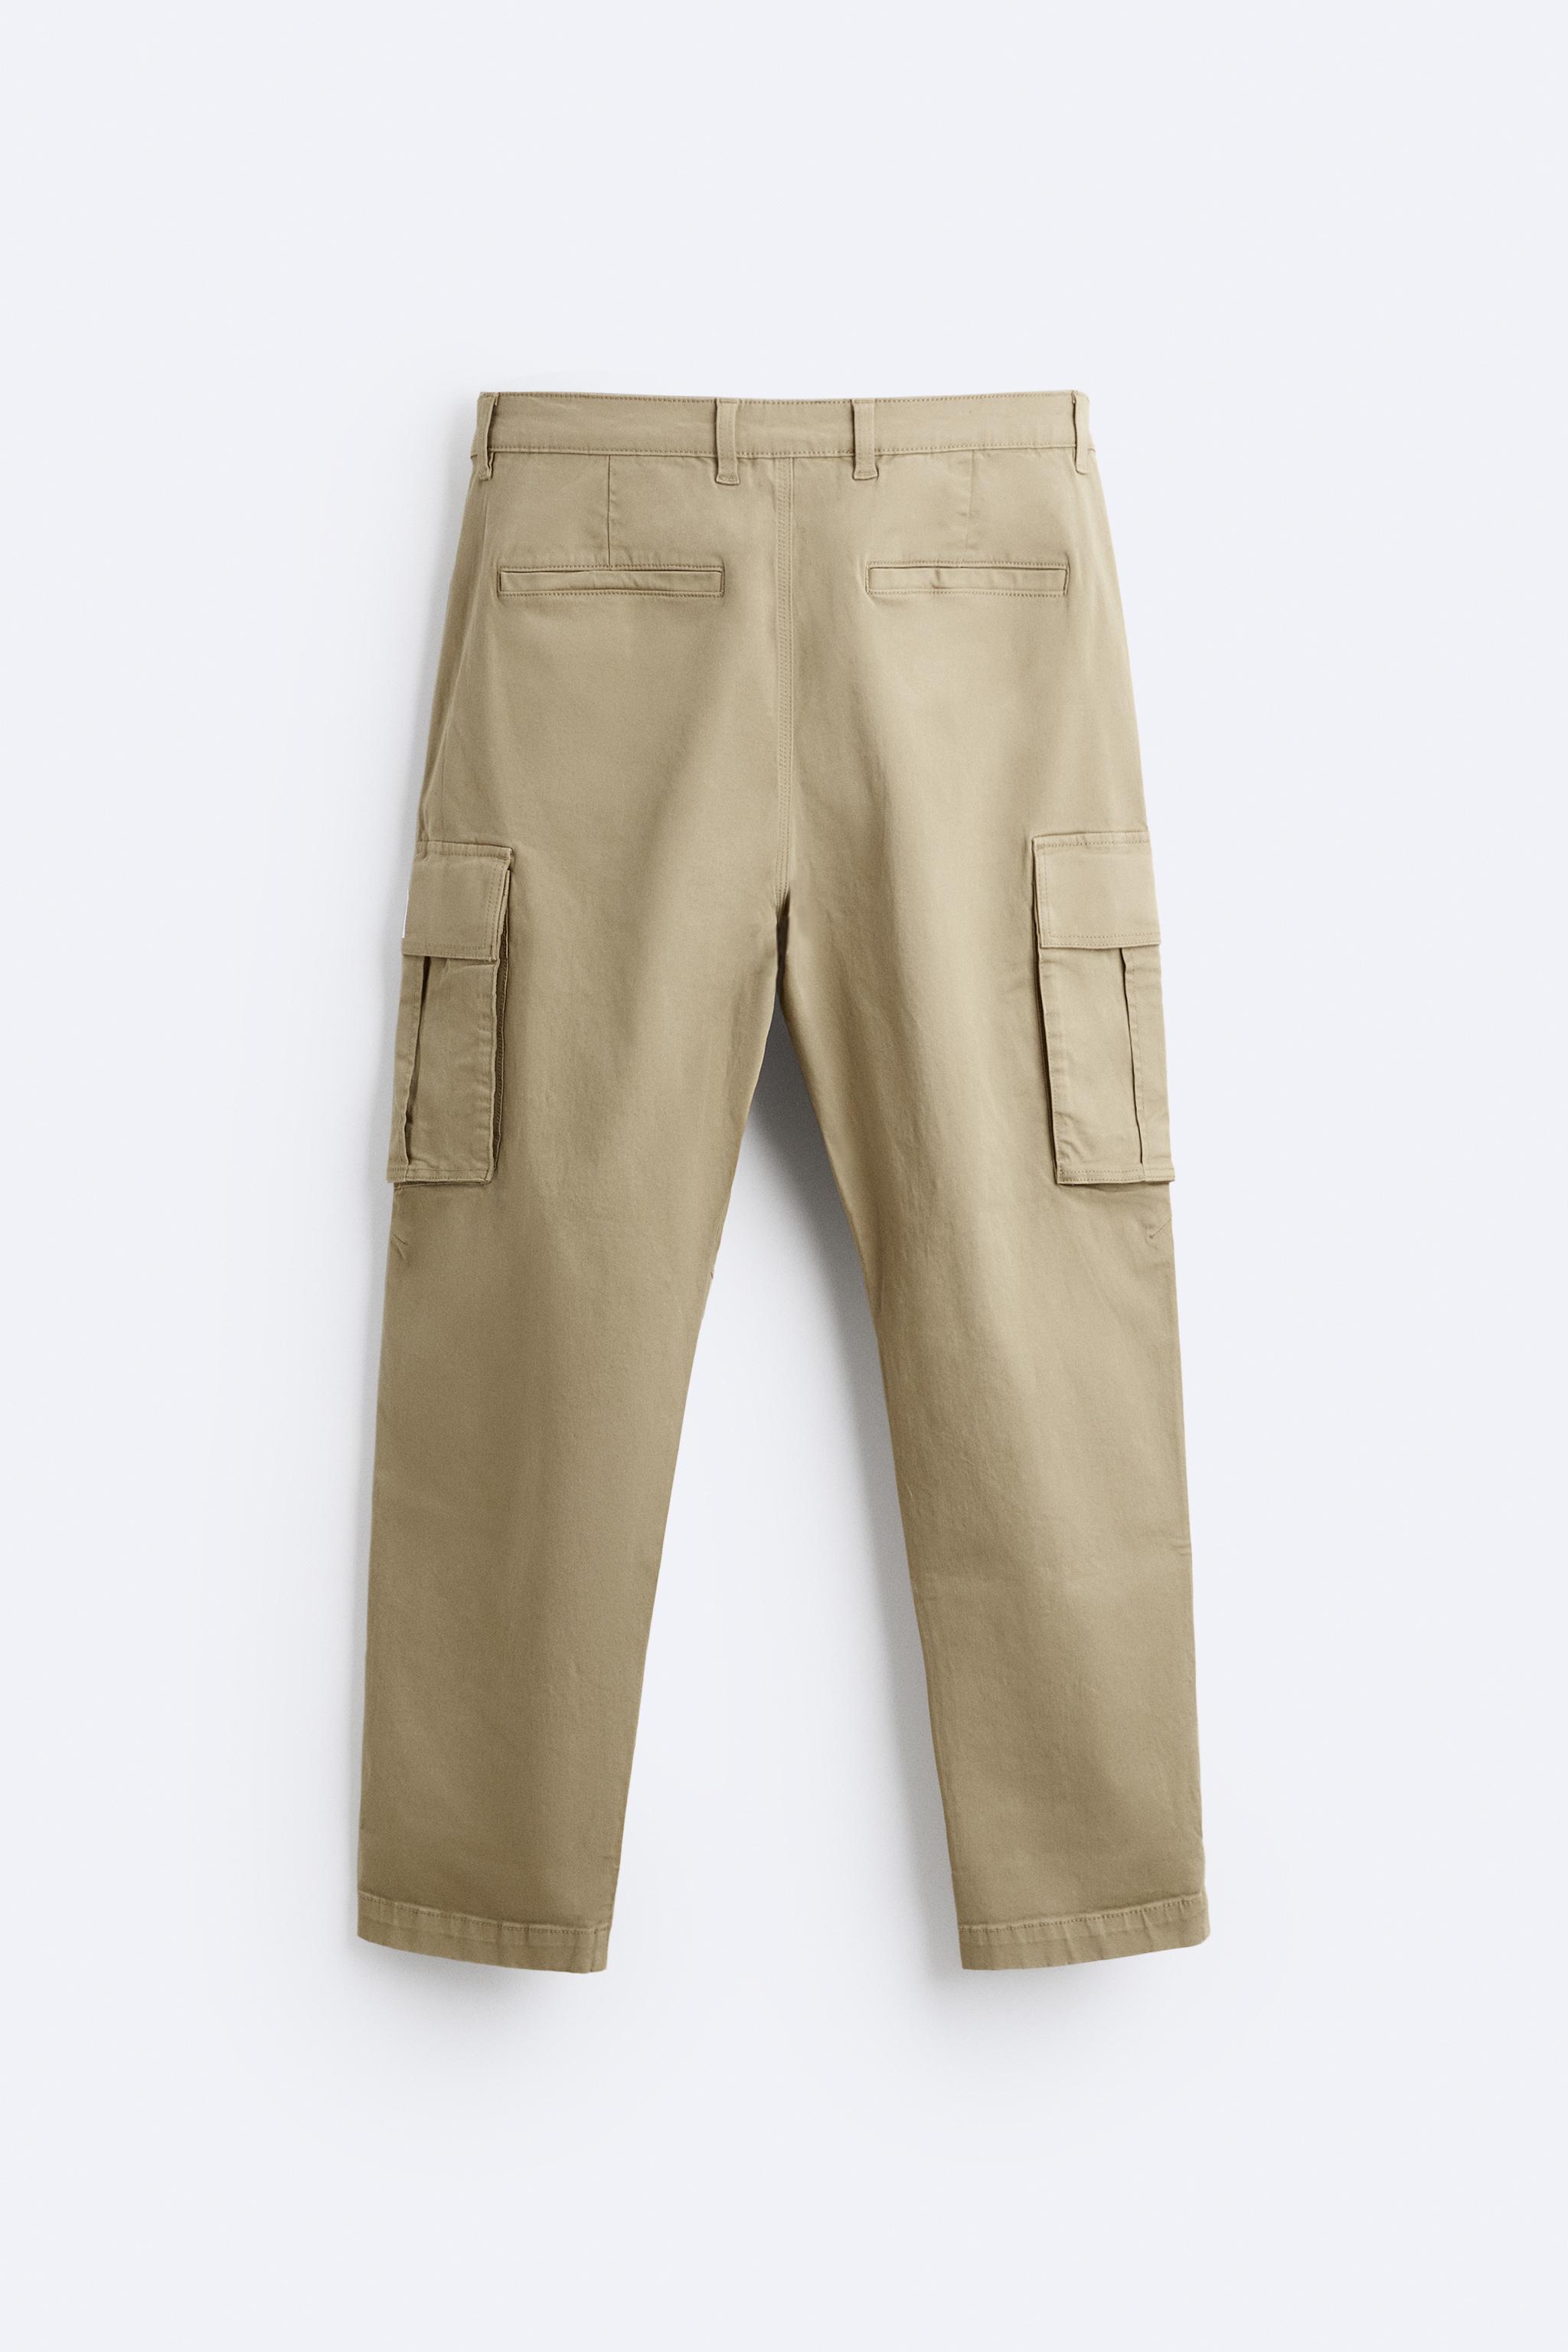 Zara, Pants & Jumpsuits, Zara Utility Cargo Pant